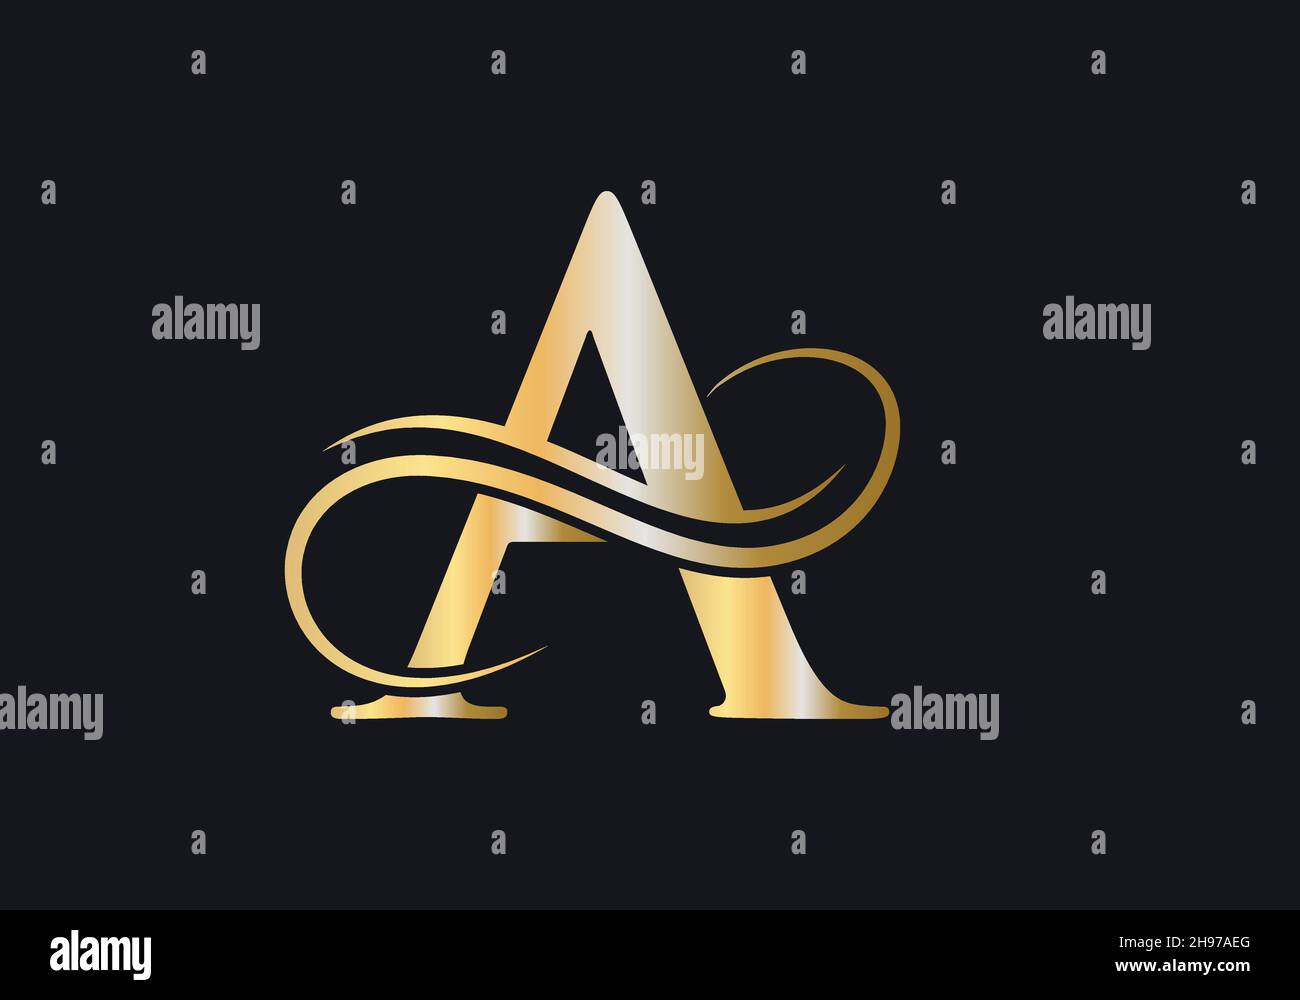 Luxury Brand Modern Gold Logo Template Design Vector Image Stock  Illustration - Download Image Now - iStock